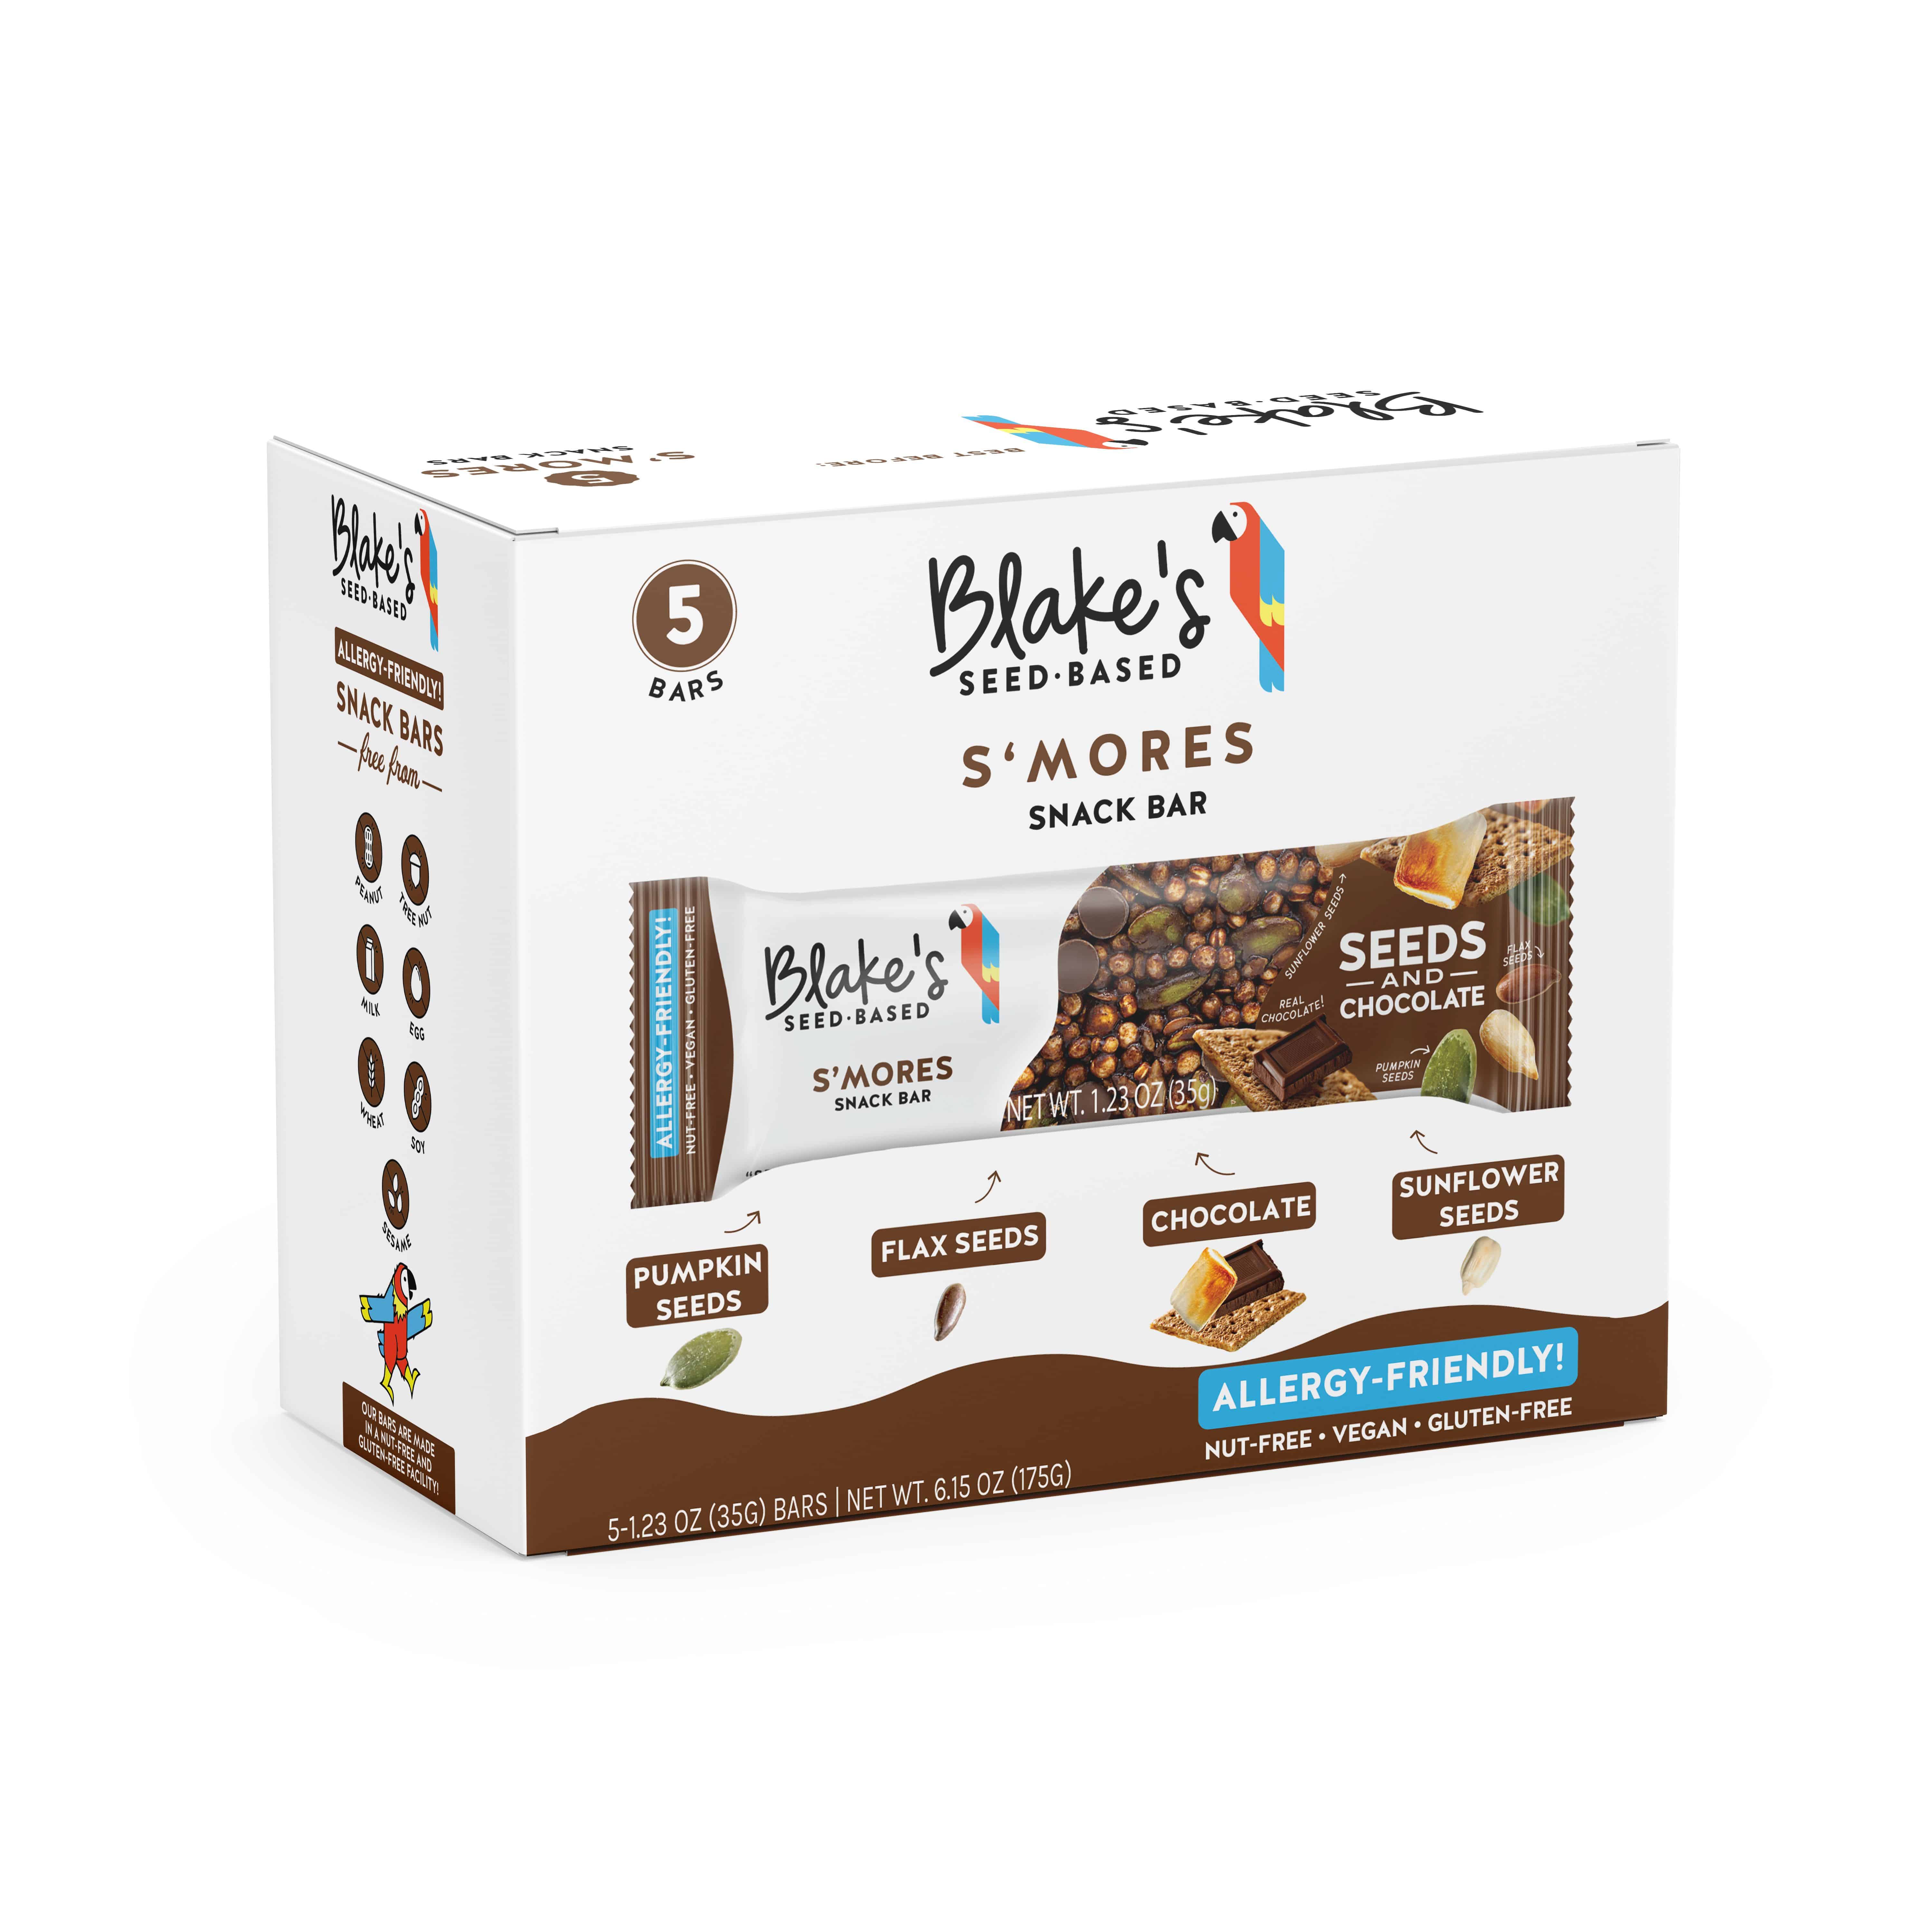 Blake's Seed Based S'mores Snack Bar 6 innerpacks per case